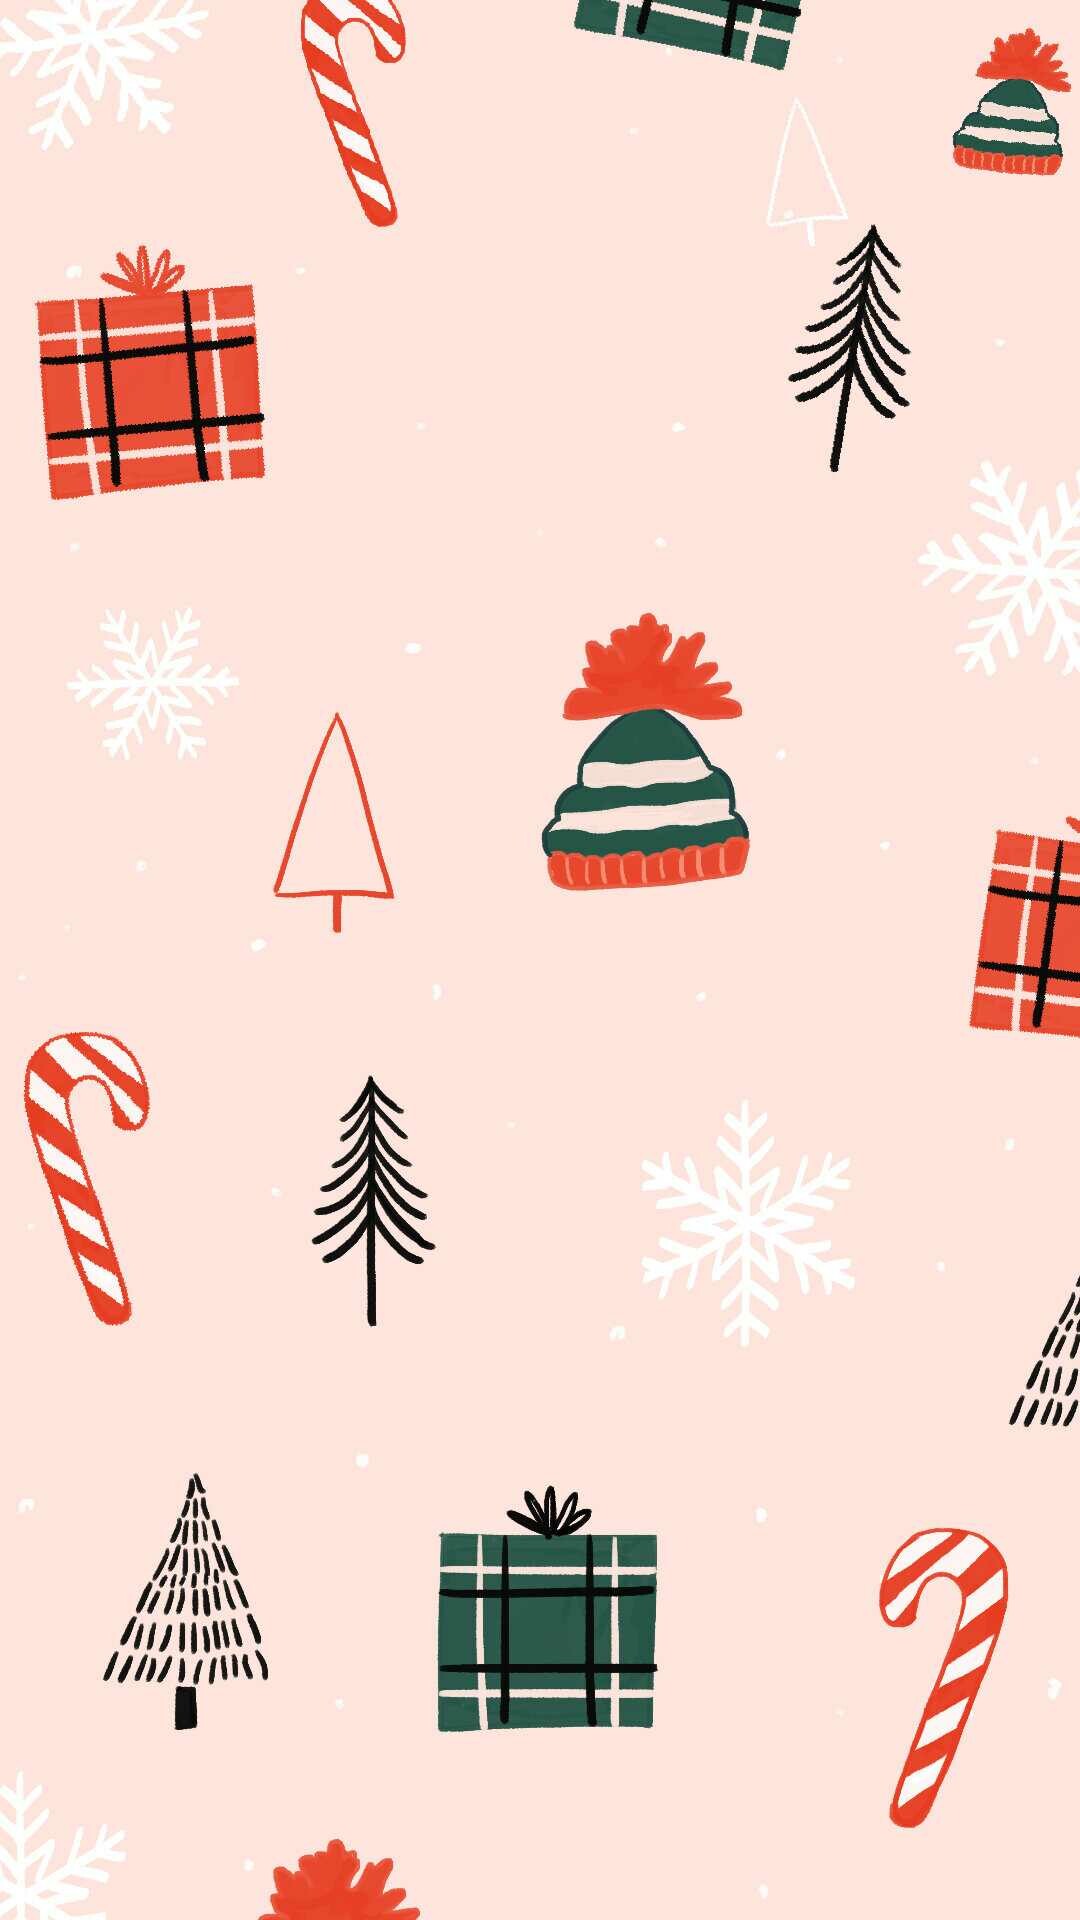 Christmas: Xmas symbols, Gifts, Candy Canes, Minimalistic. 1080x1920 Full HD Background.